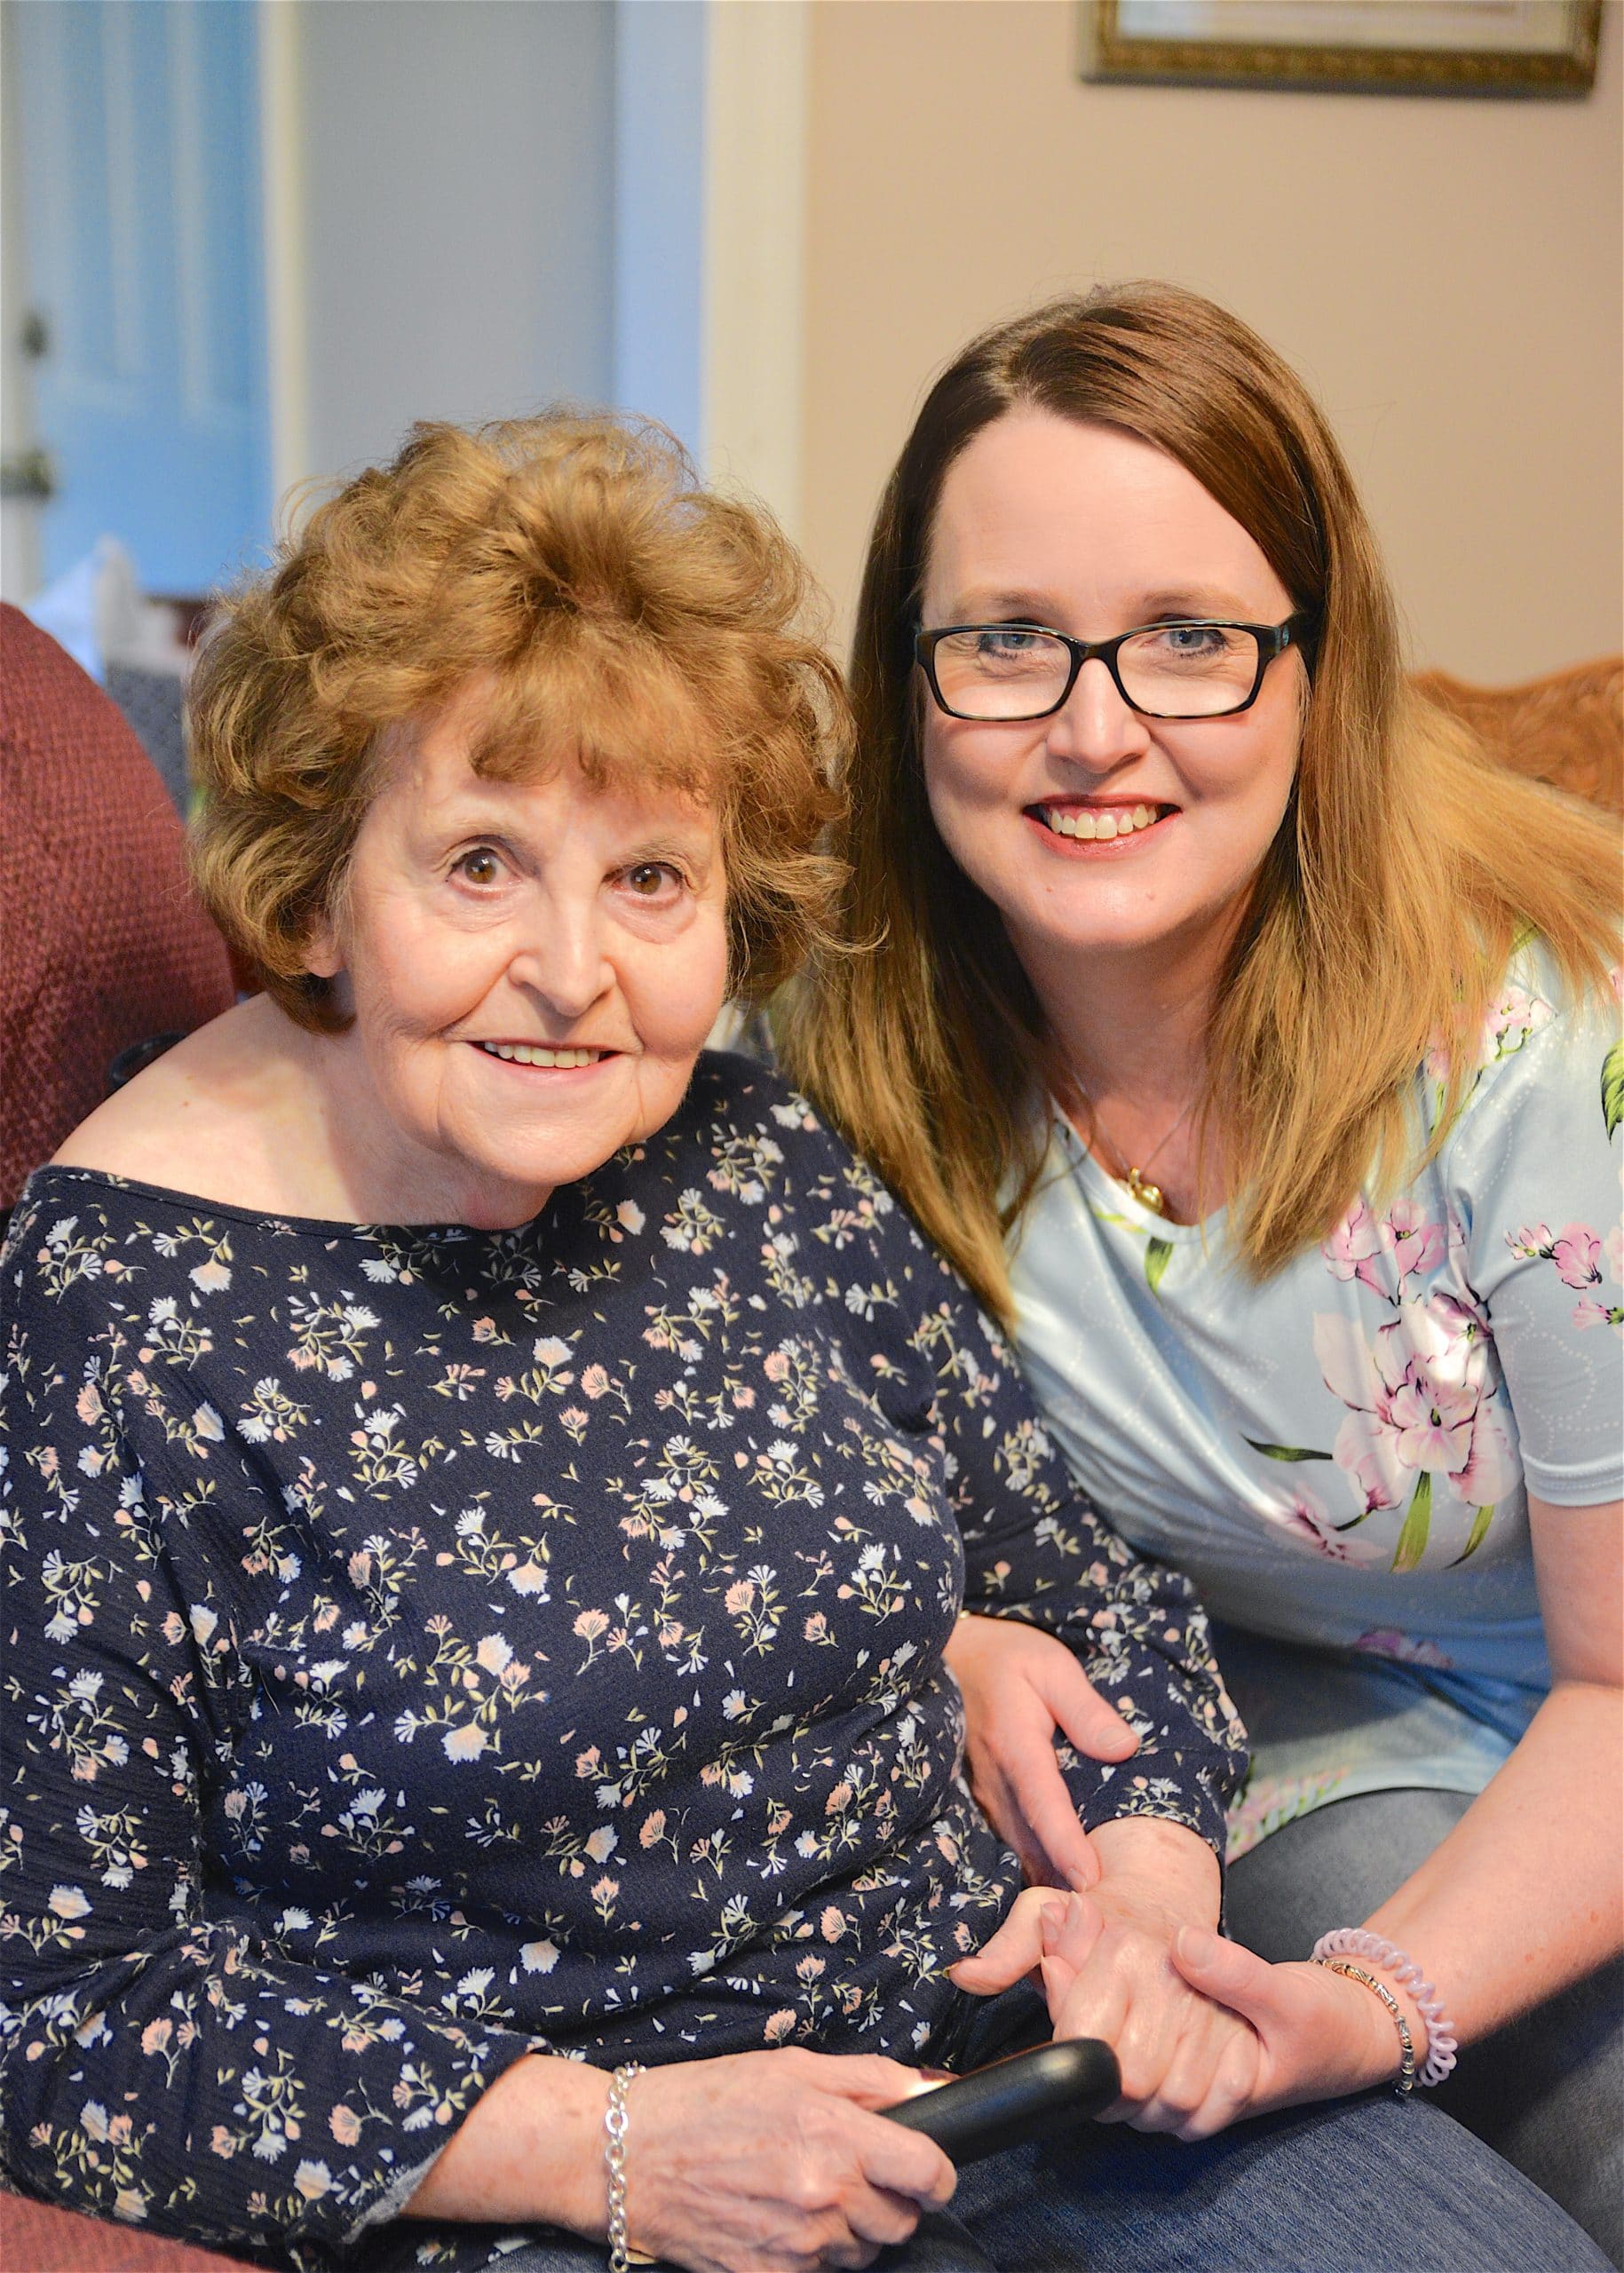 Caregiving for her mom with Alzheimer's